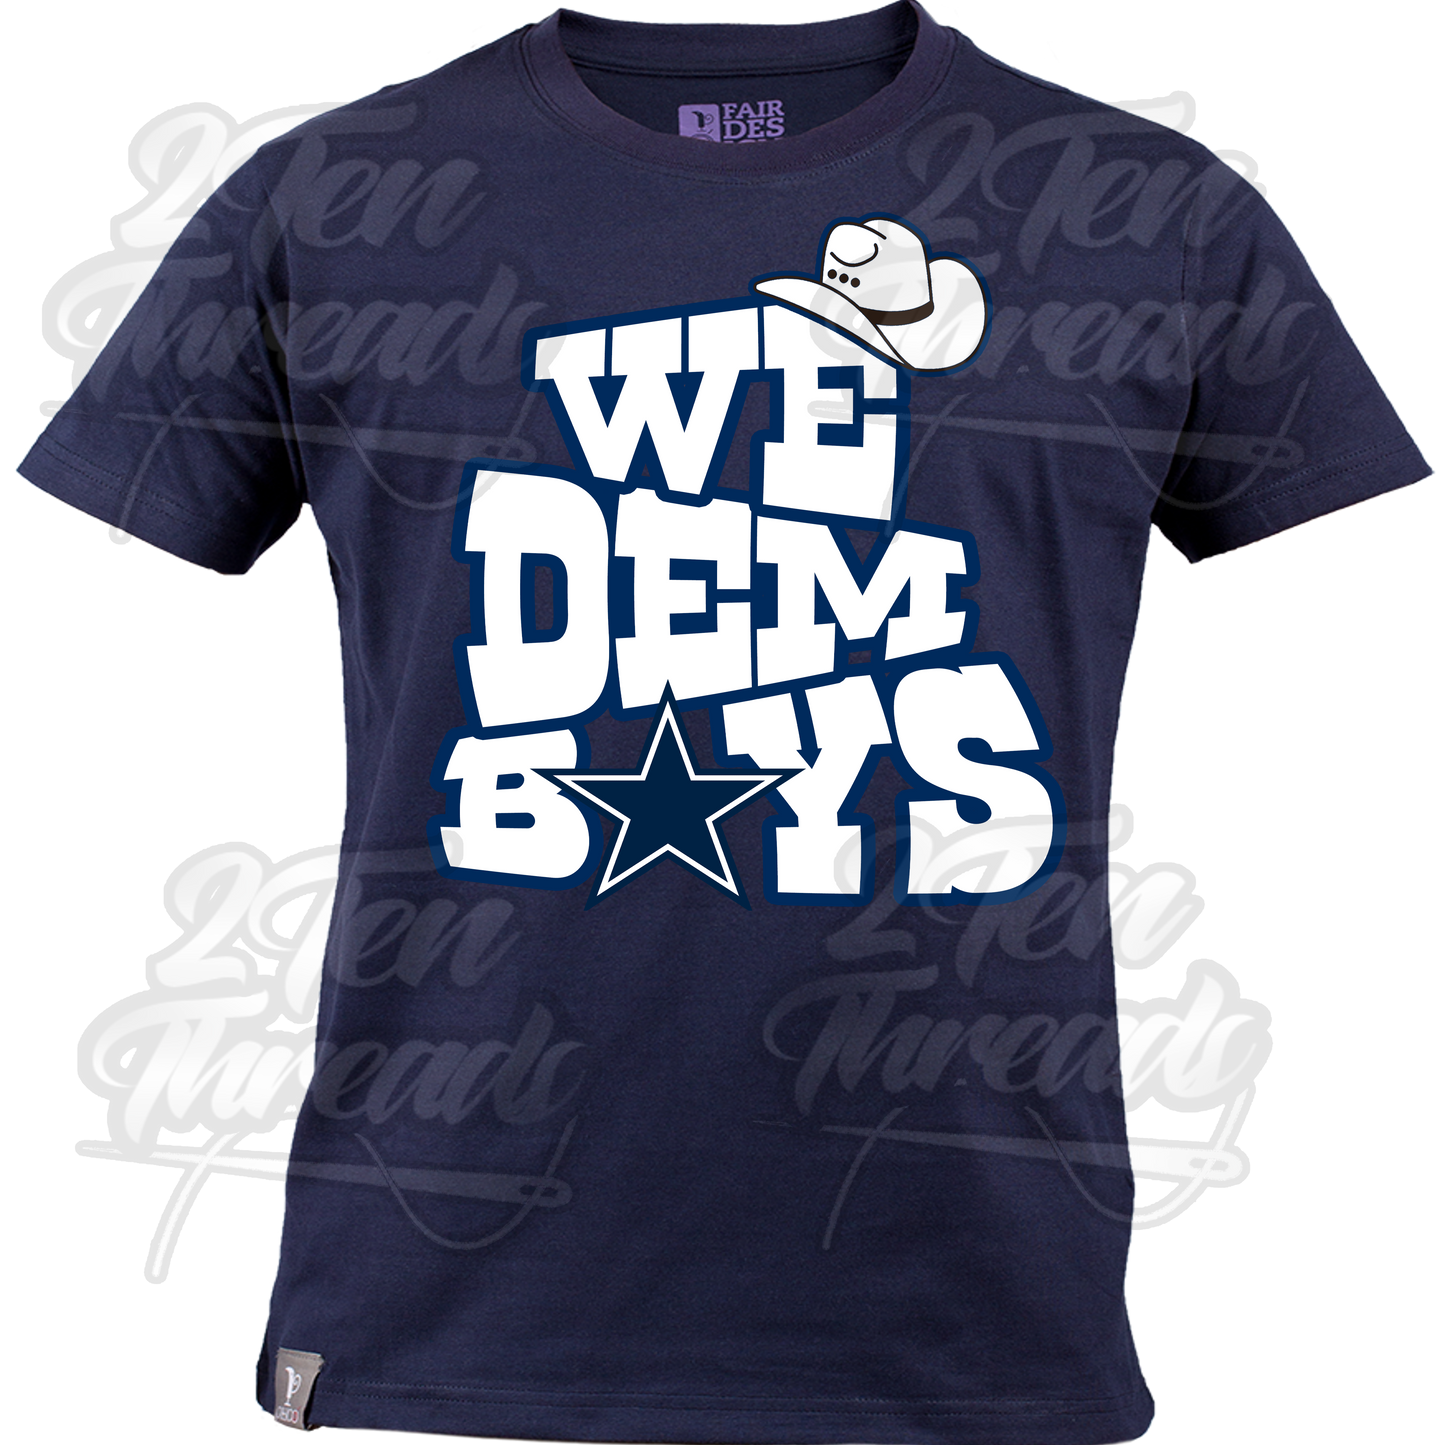 We Dem boys Cowboys Shirt